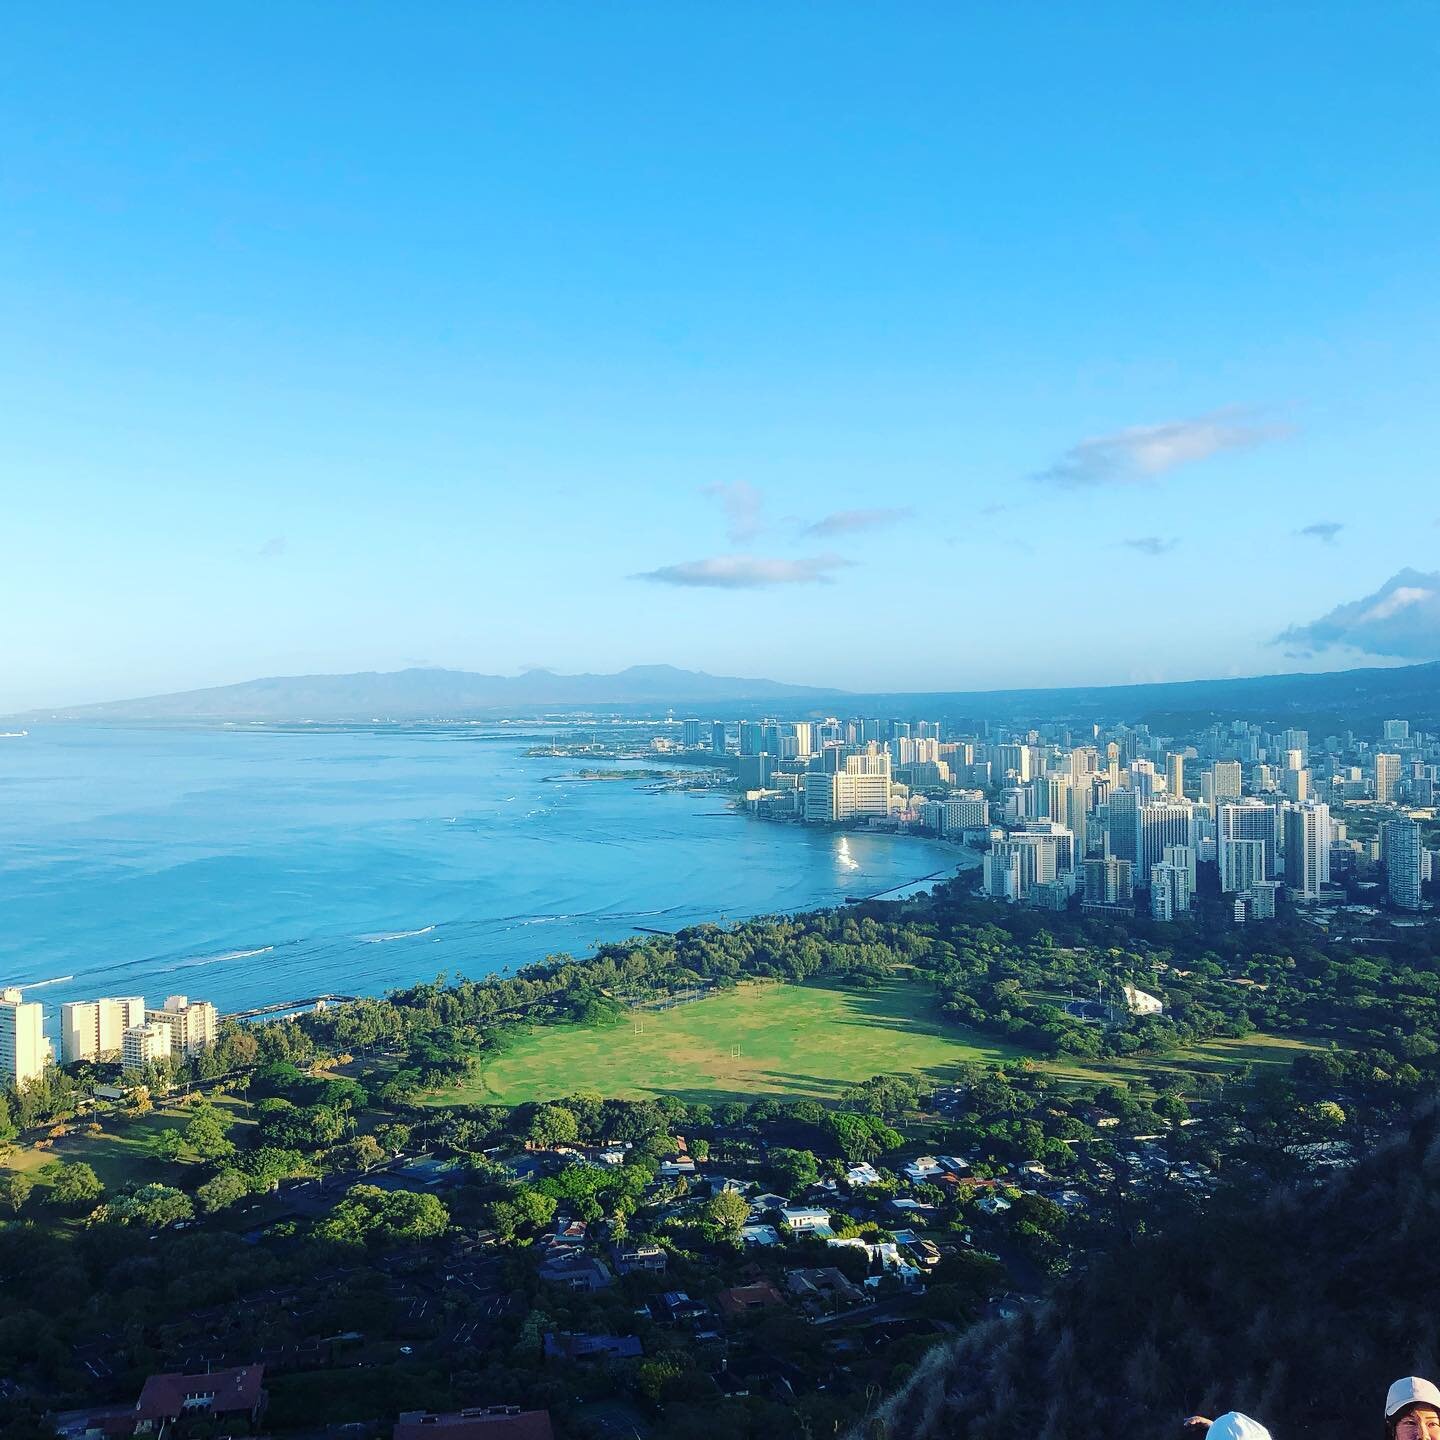 Amazing view of Waikiki from the top of the Diamond crater Trail. Getting up early was worth it! #Hawaii #hiking #waikiki #diamondheadhike